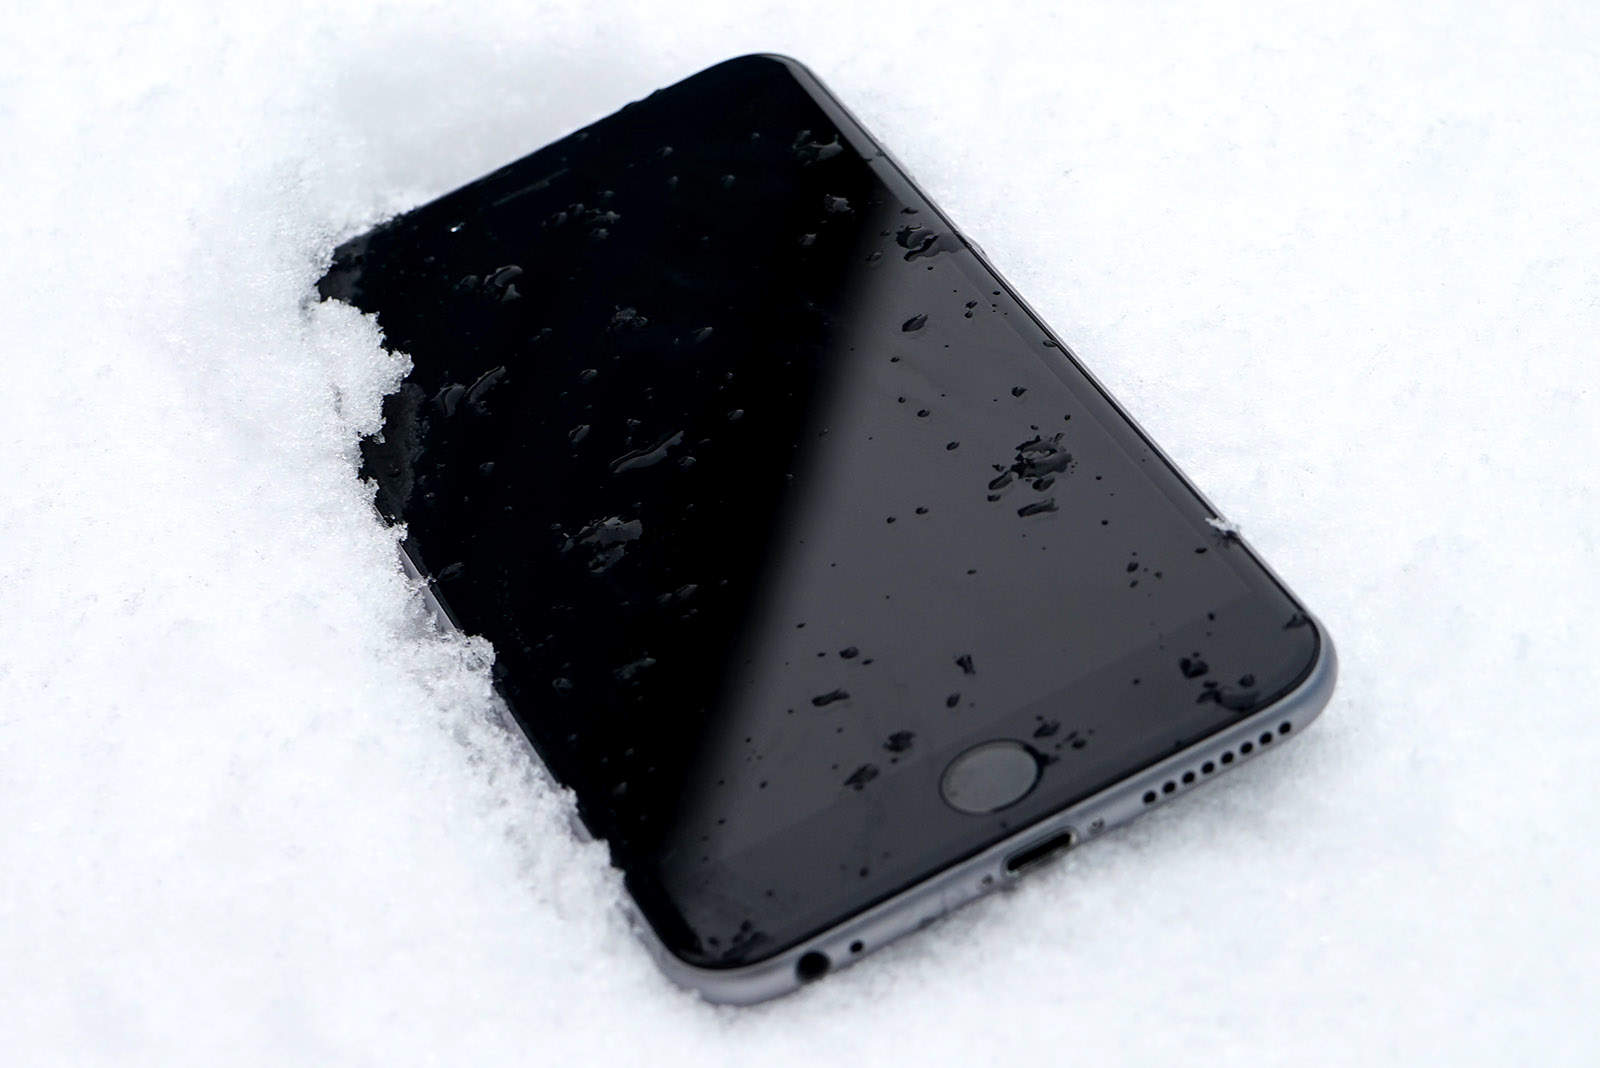 iPhone_6 Plus_Frozen_Snow